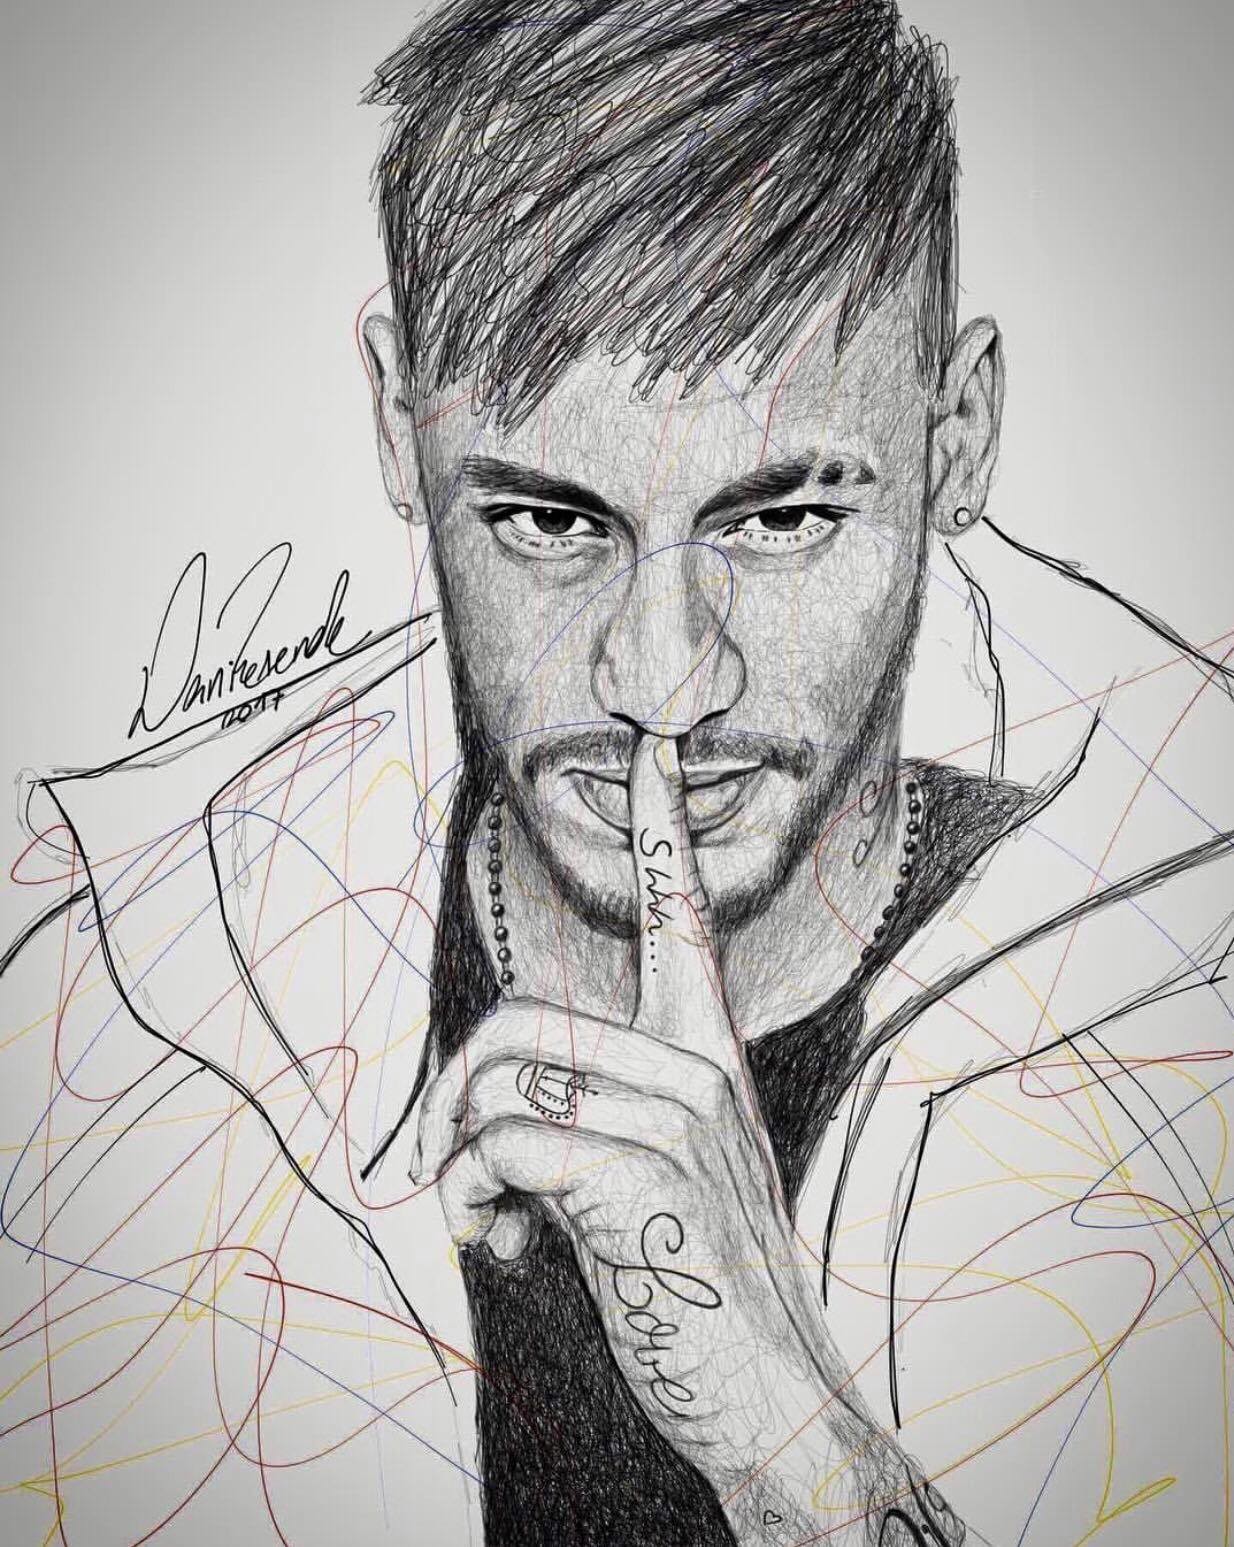 Drawings  Paintings on X Pencil Drawing of neymarjr  Neymar NeymarJr  NeymarStuff neymarxox NeymarStuff NeymarJrFansID neymarfansite  AllFansNeymar Artist  Sachin Rajeev  httpstcoeMKyjBc4F0  X